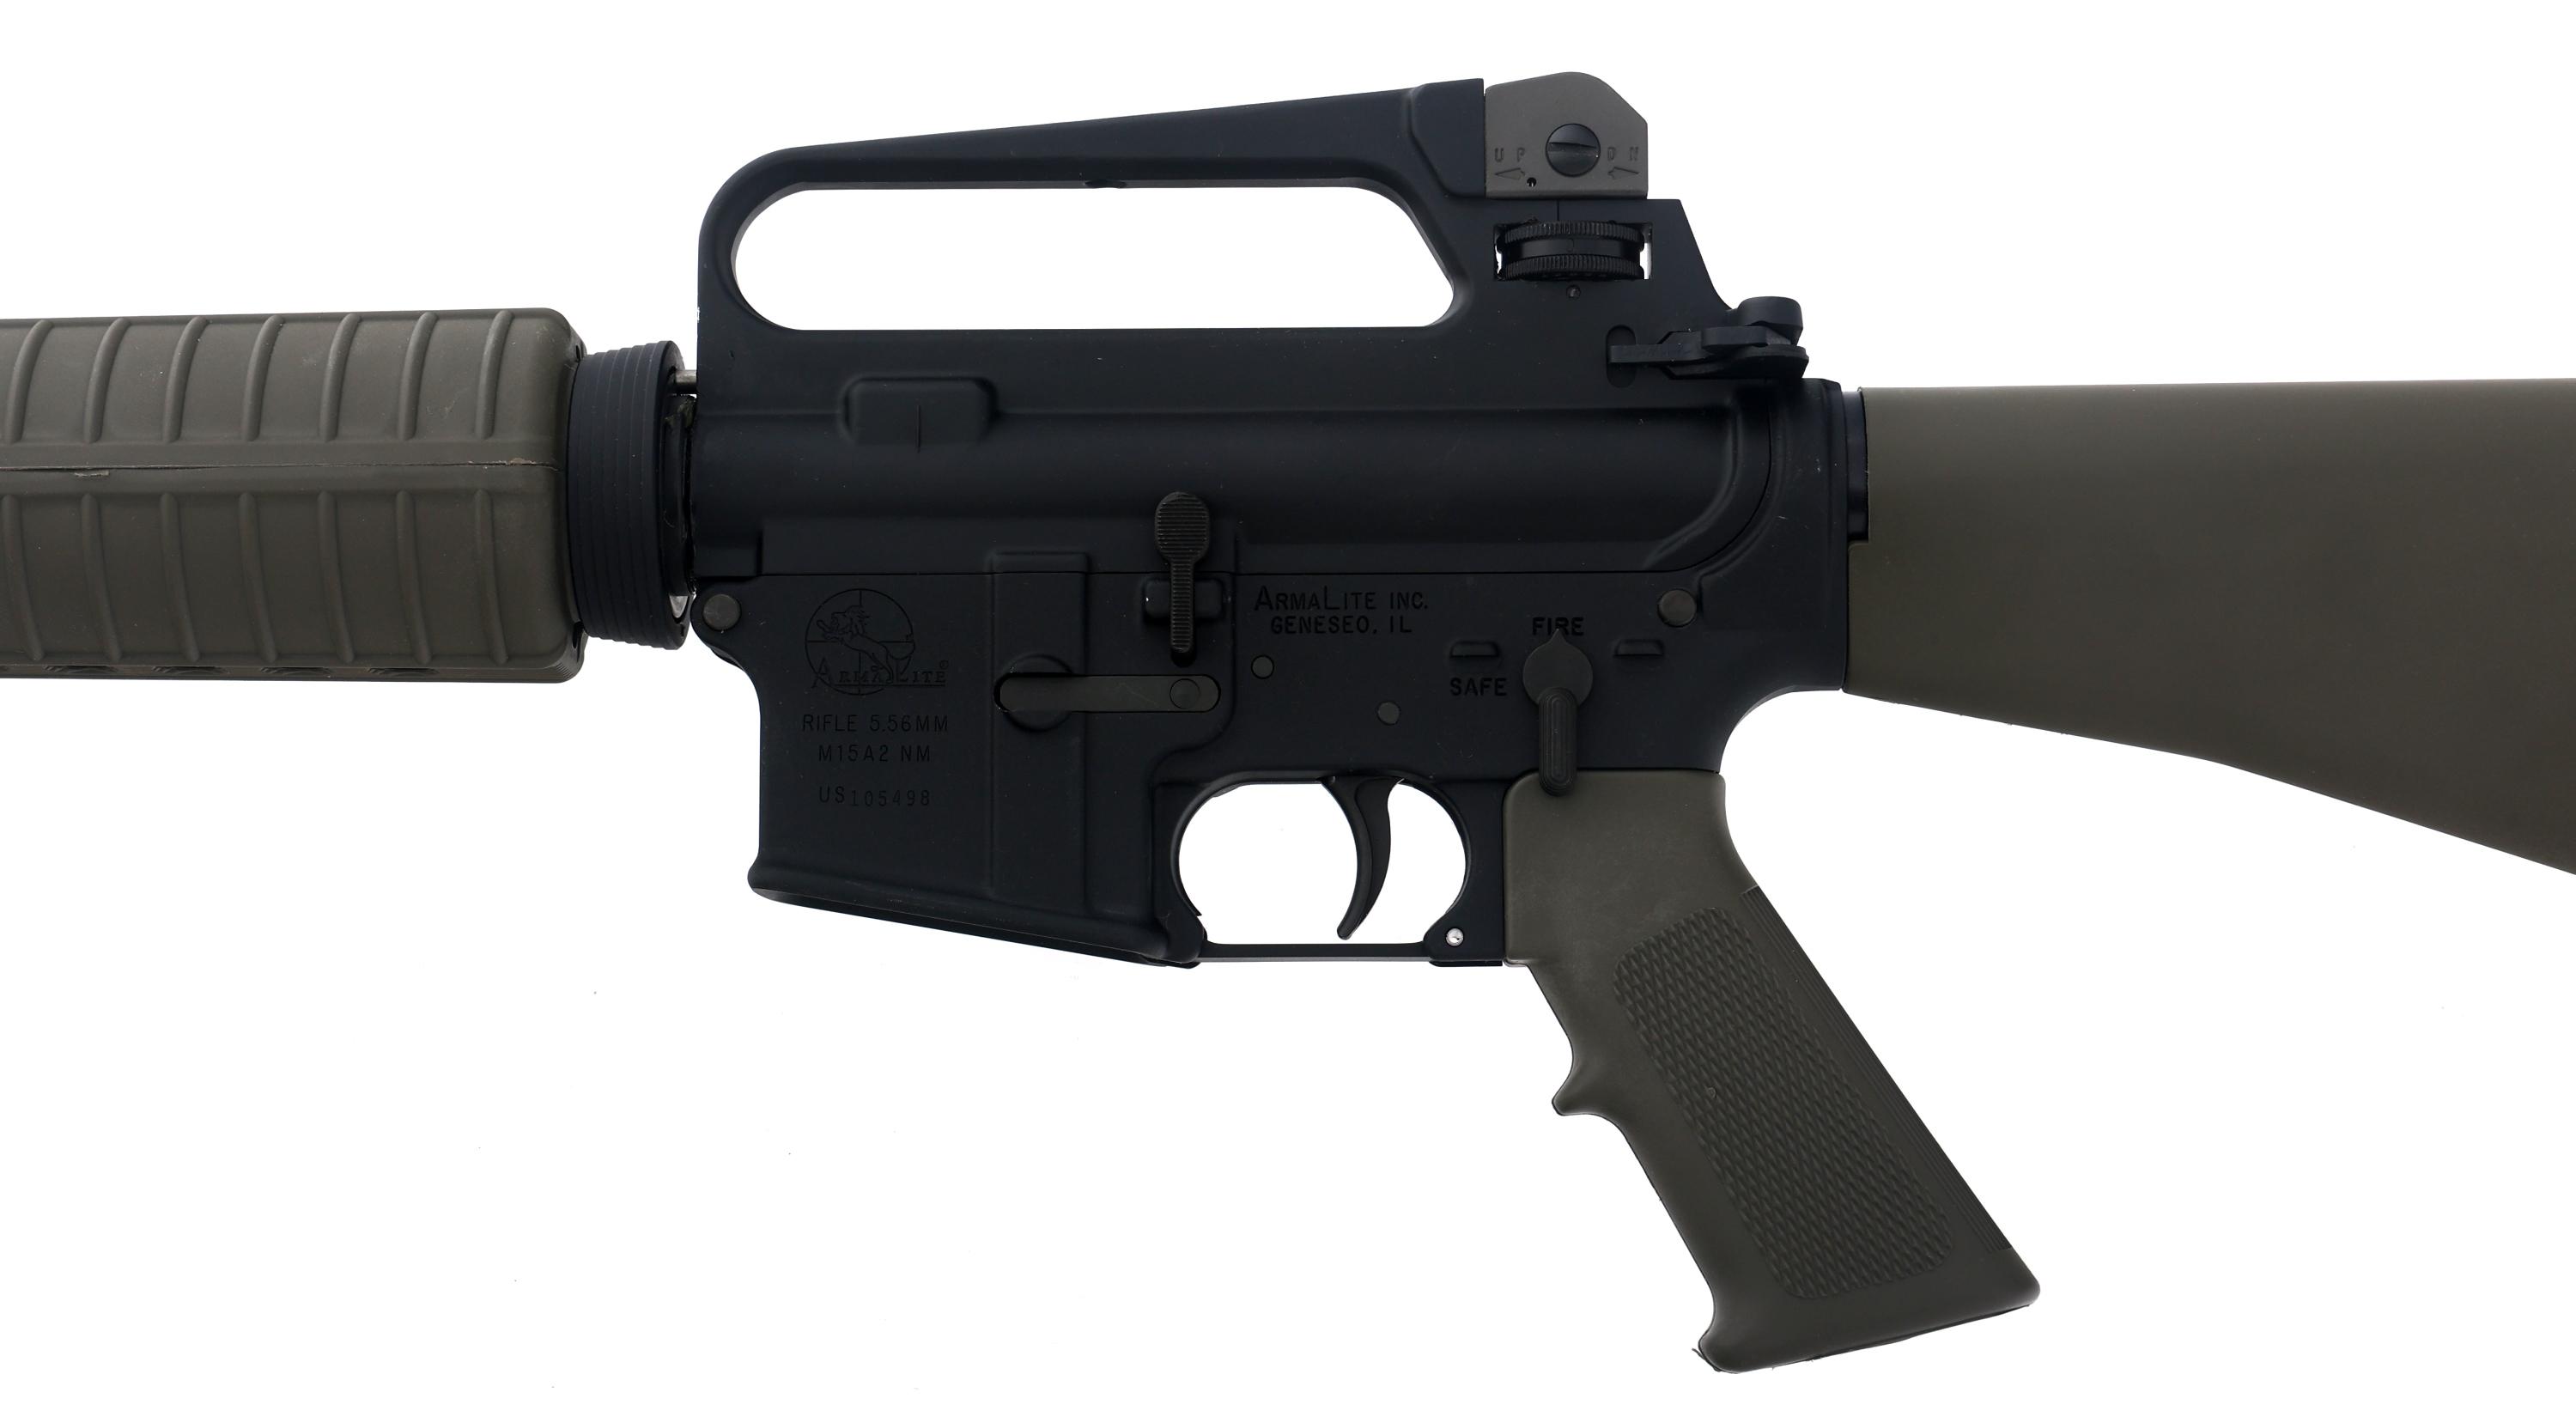 ARMALITE MODEL M15A2 5.56x45mm CALIBER RIFLE